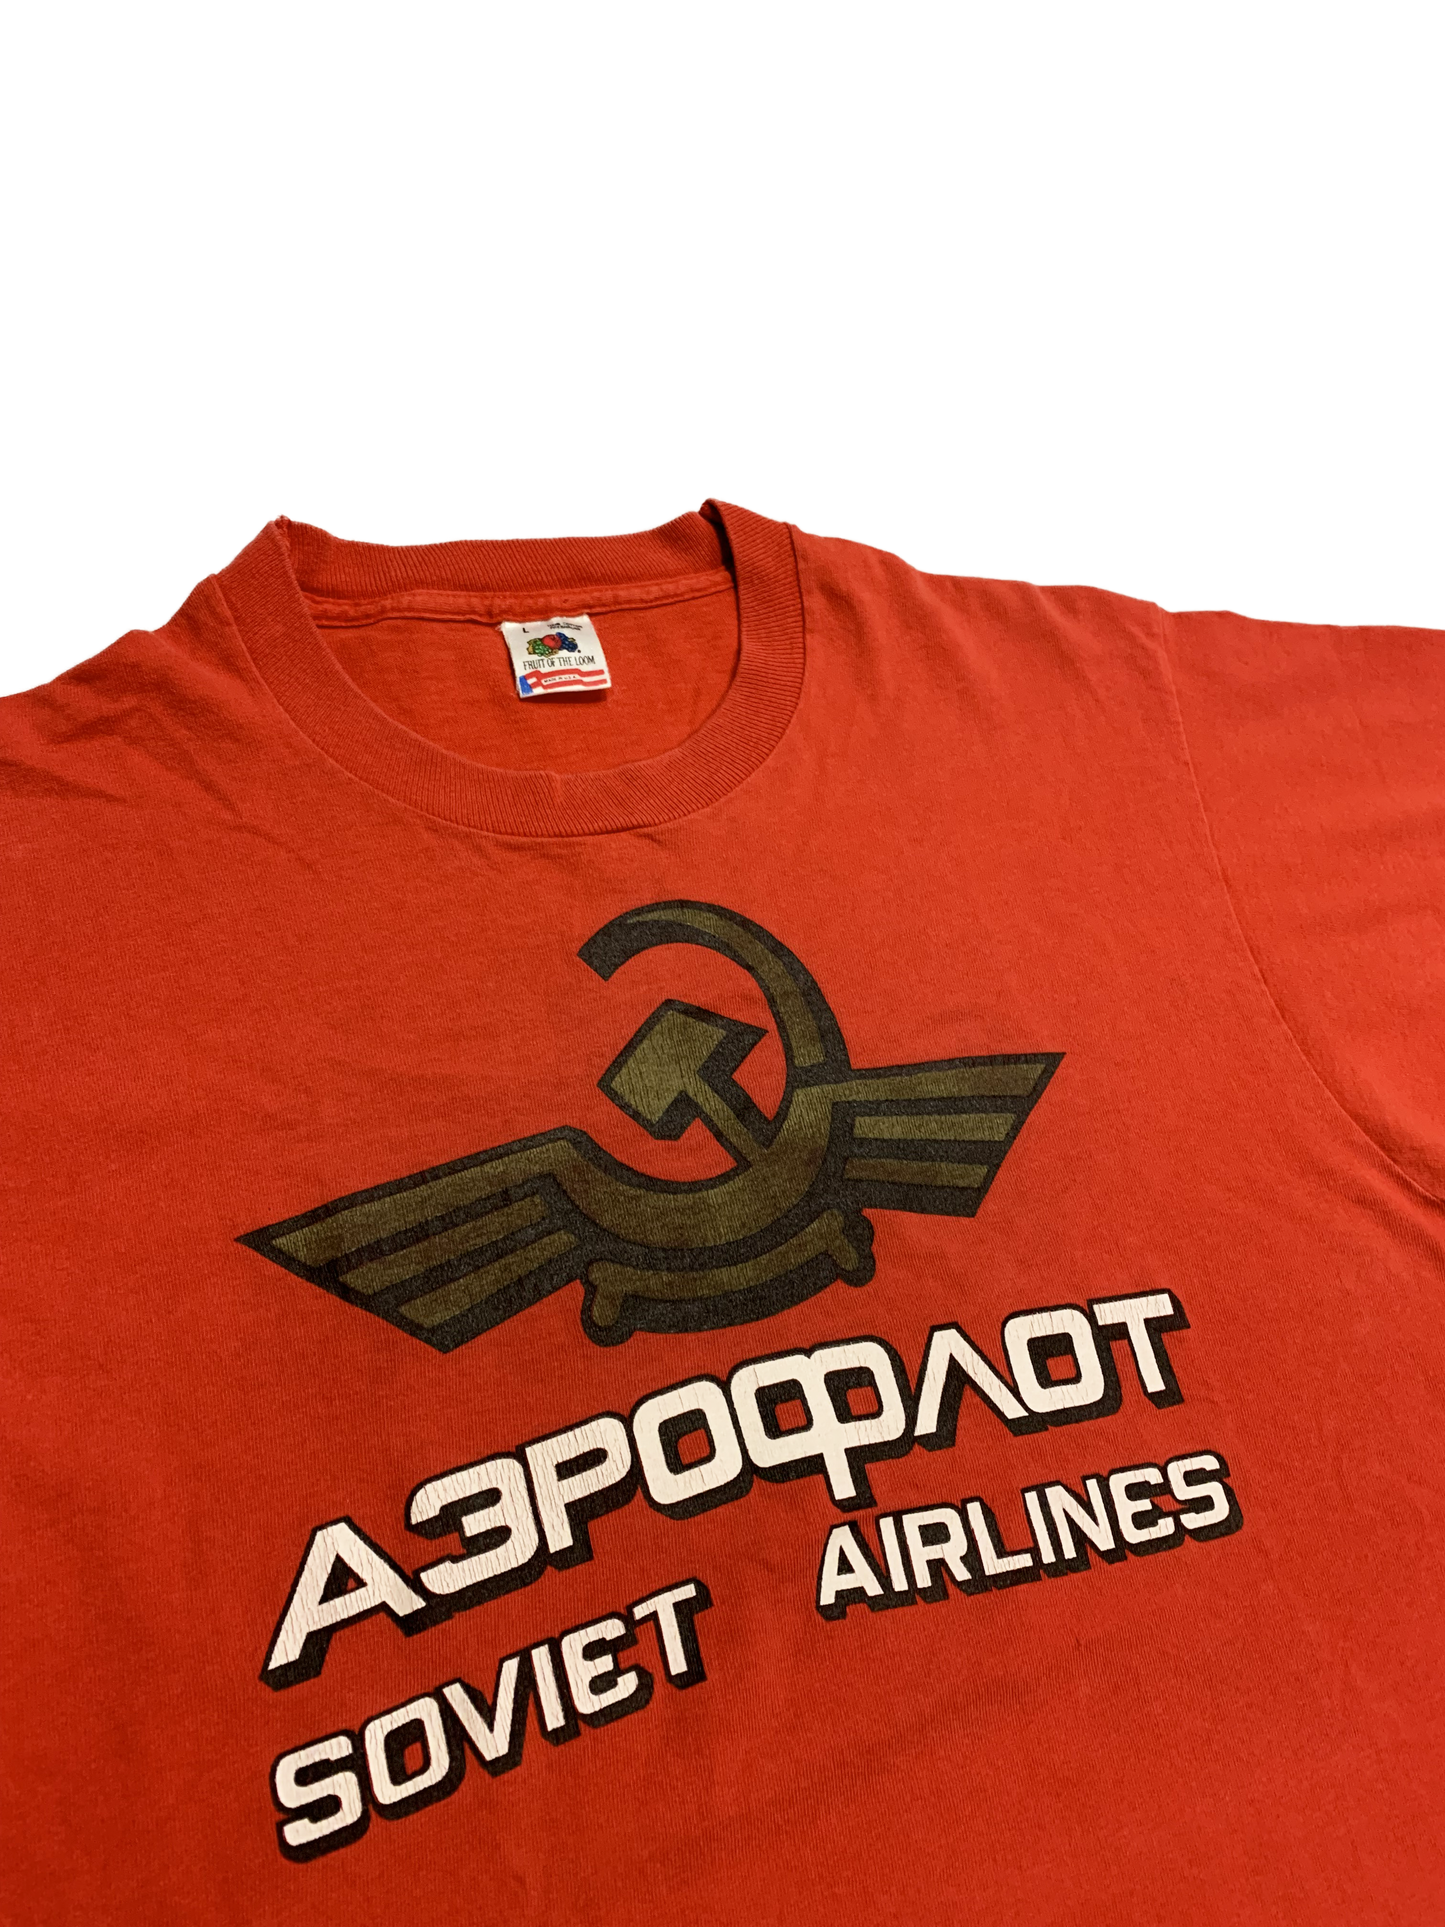 Soviet Airlines T-Shirt